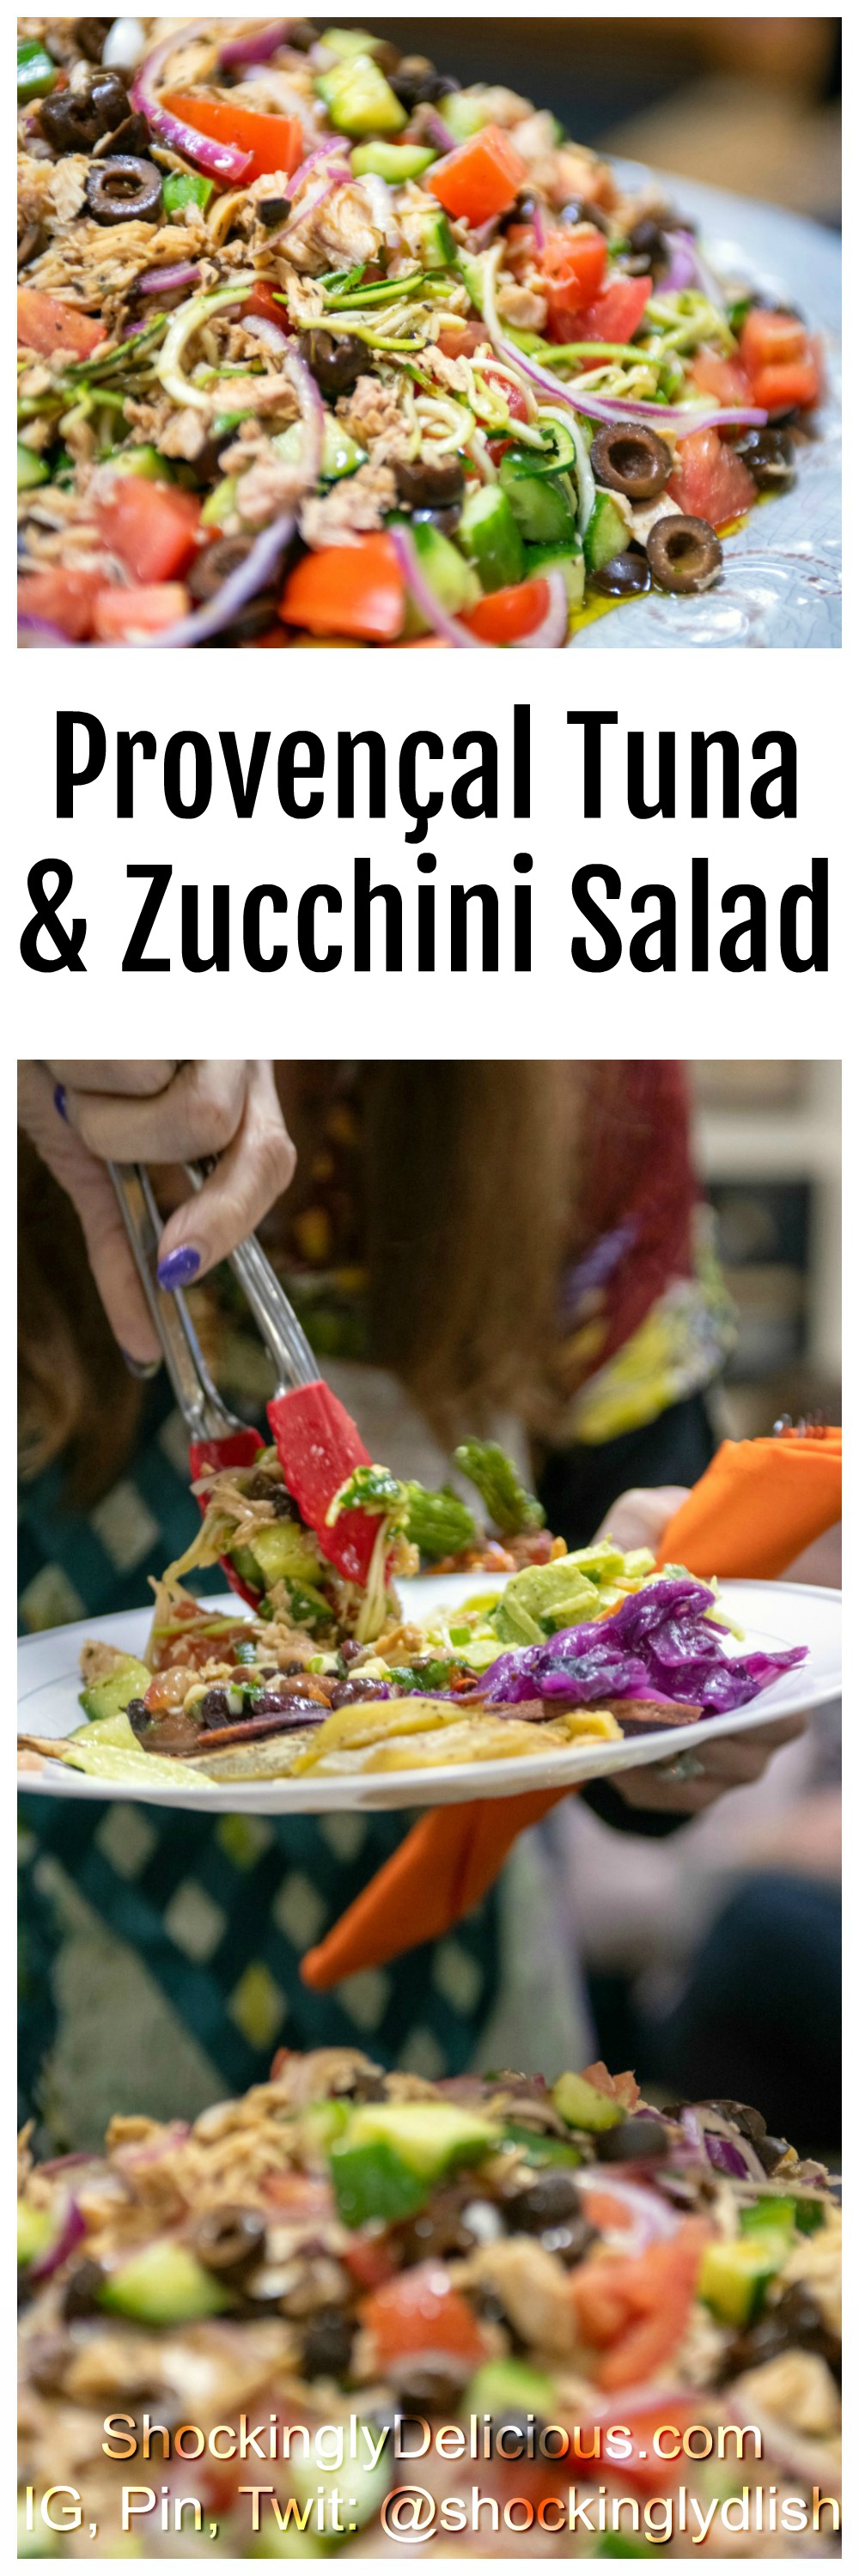 Provencal Tuna and Zucchini Salad Recipe Pin on ShockinglyDelicious.com